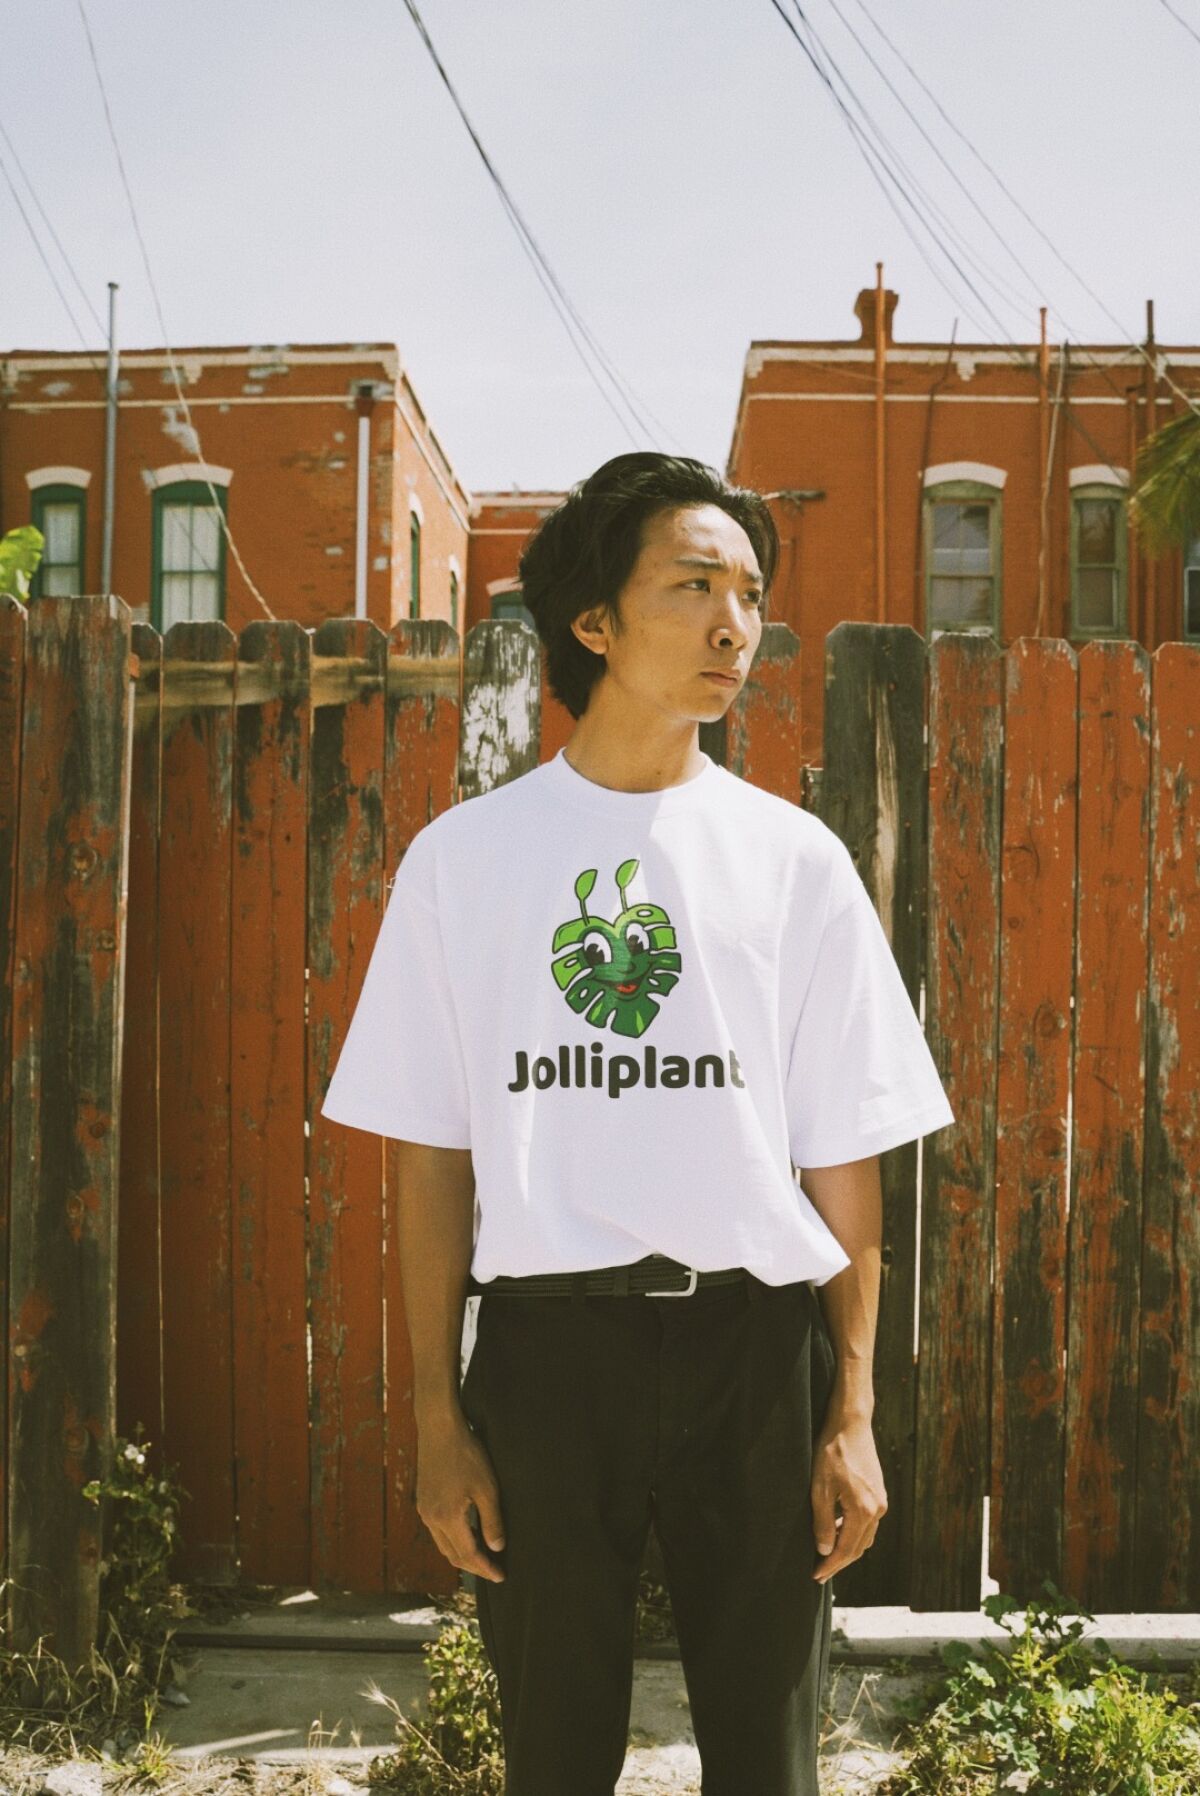 Jolliplant T-shirt from Playbonsai